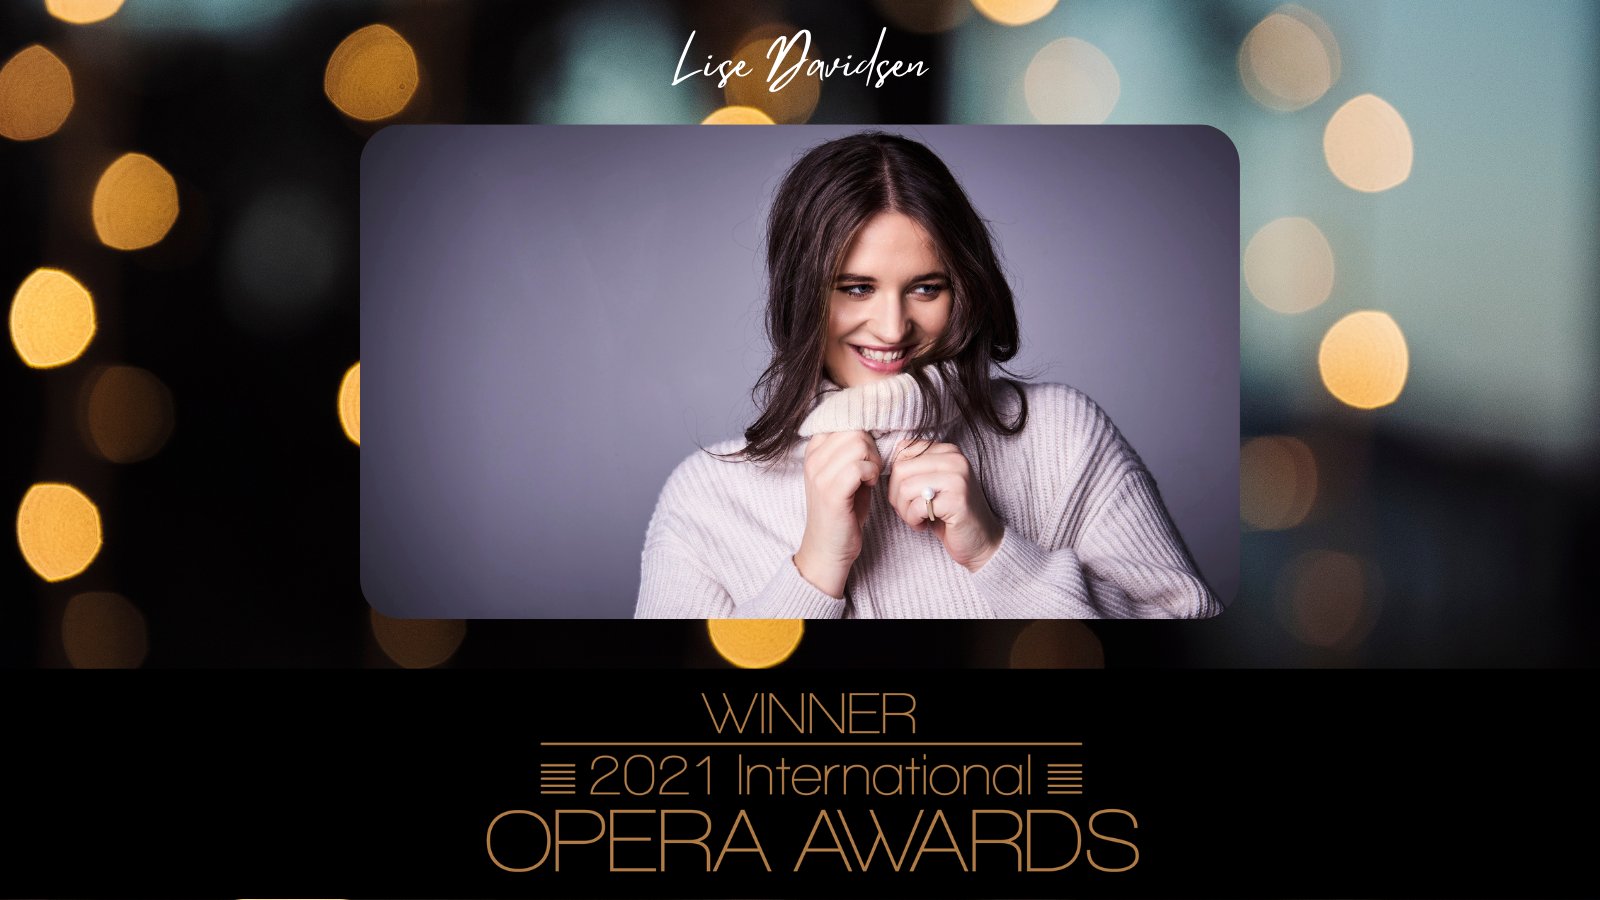 2021 International Opera Awards Female Singer of the Year!